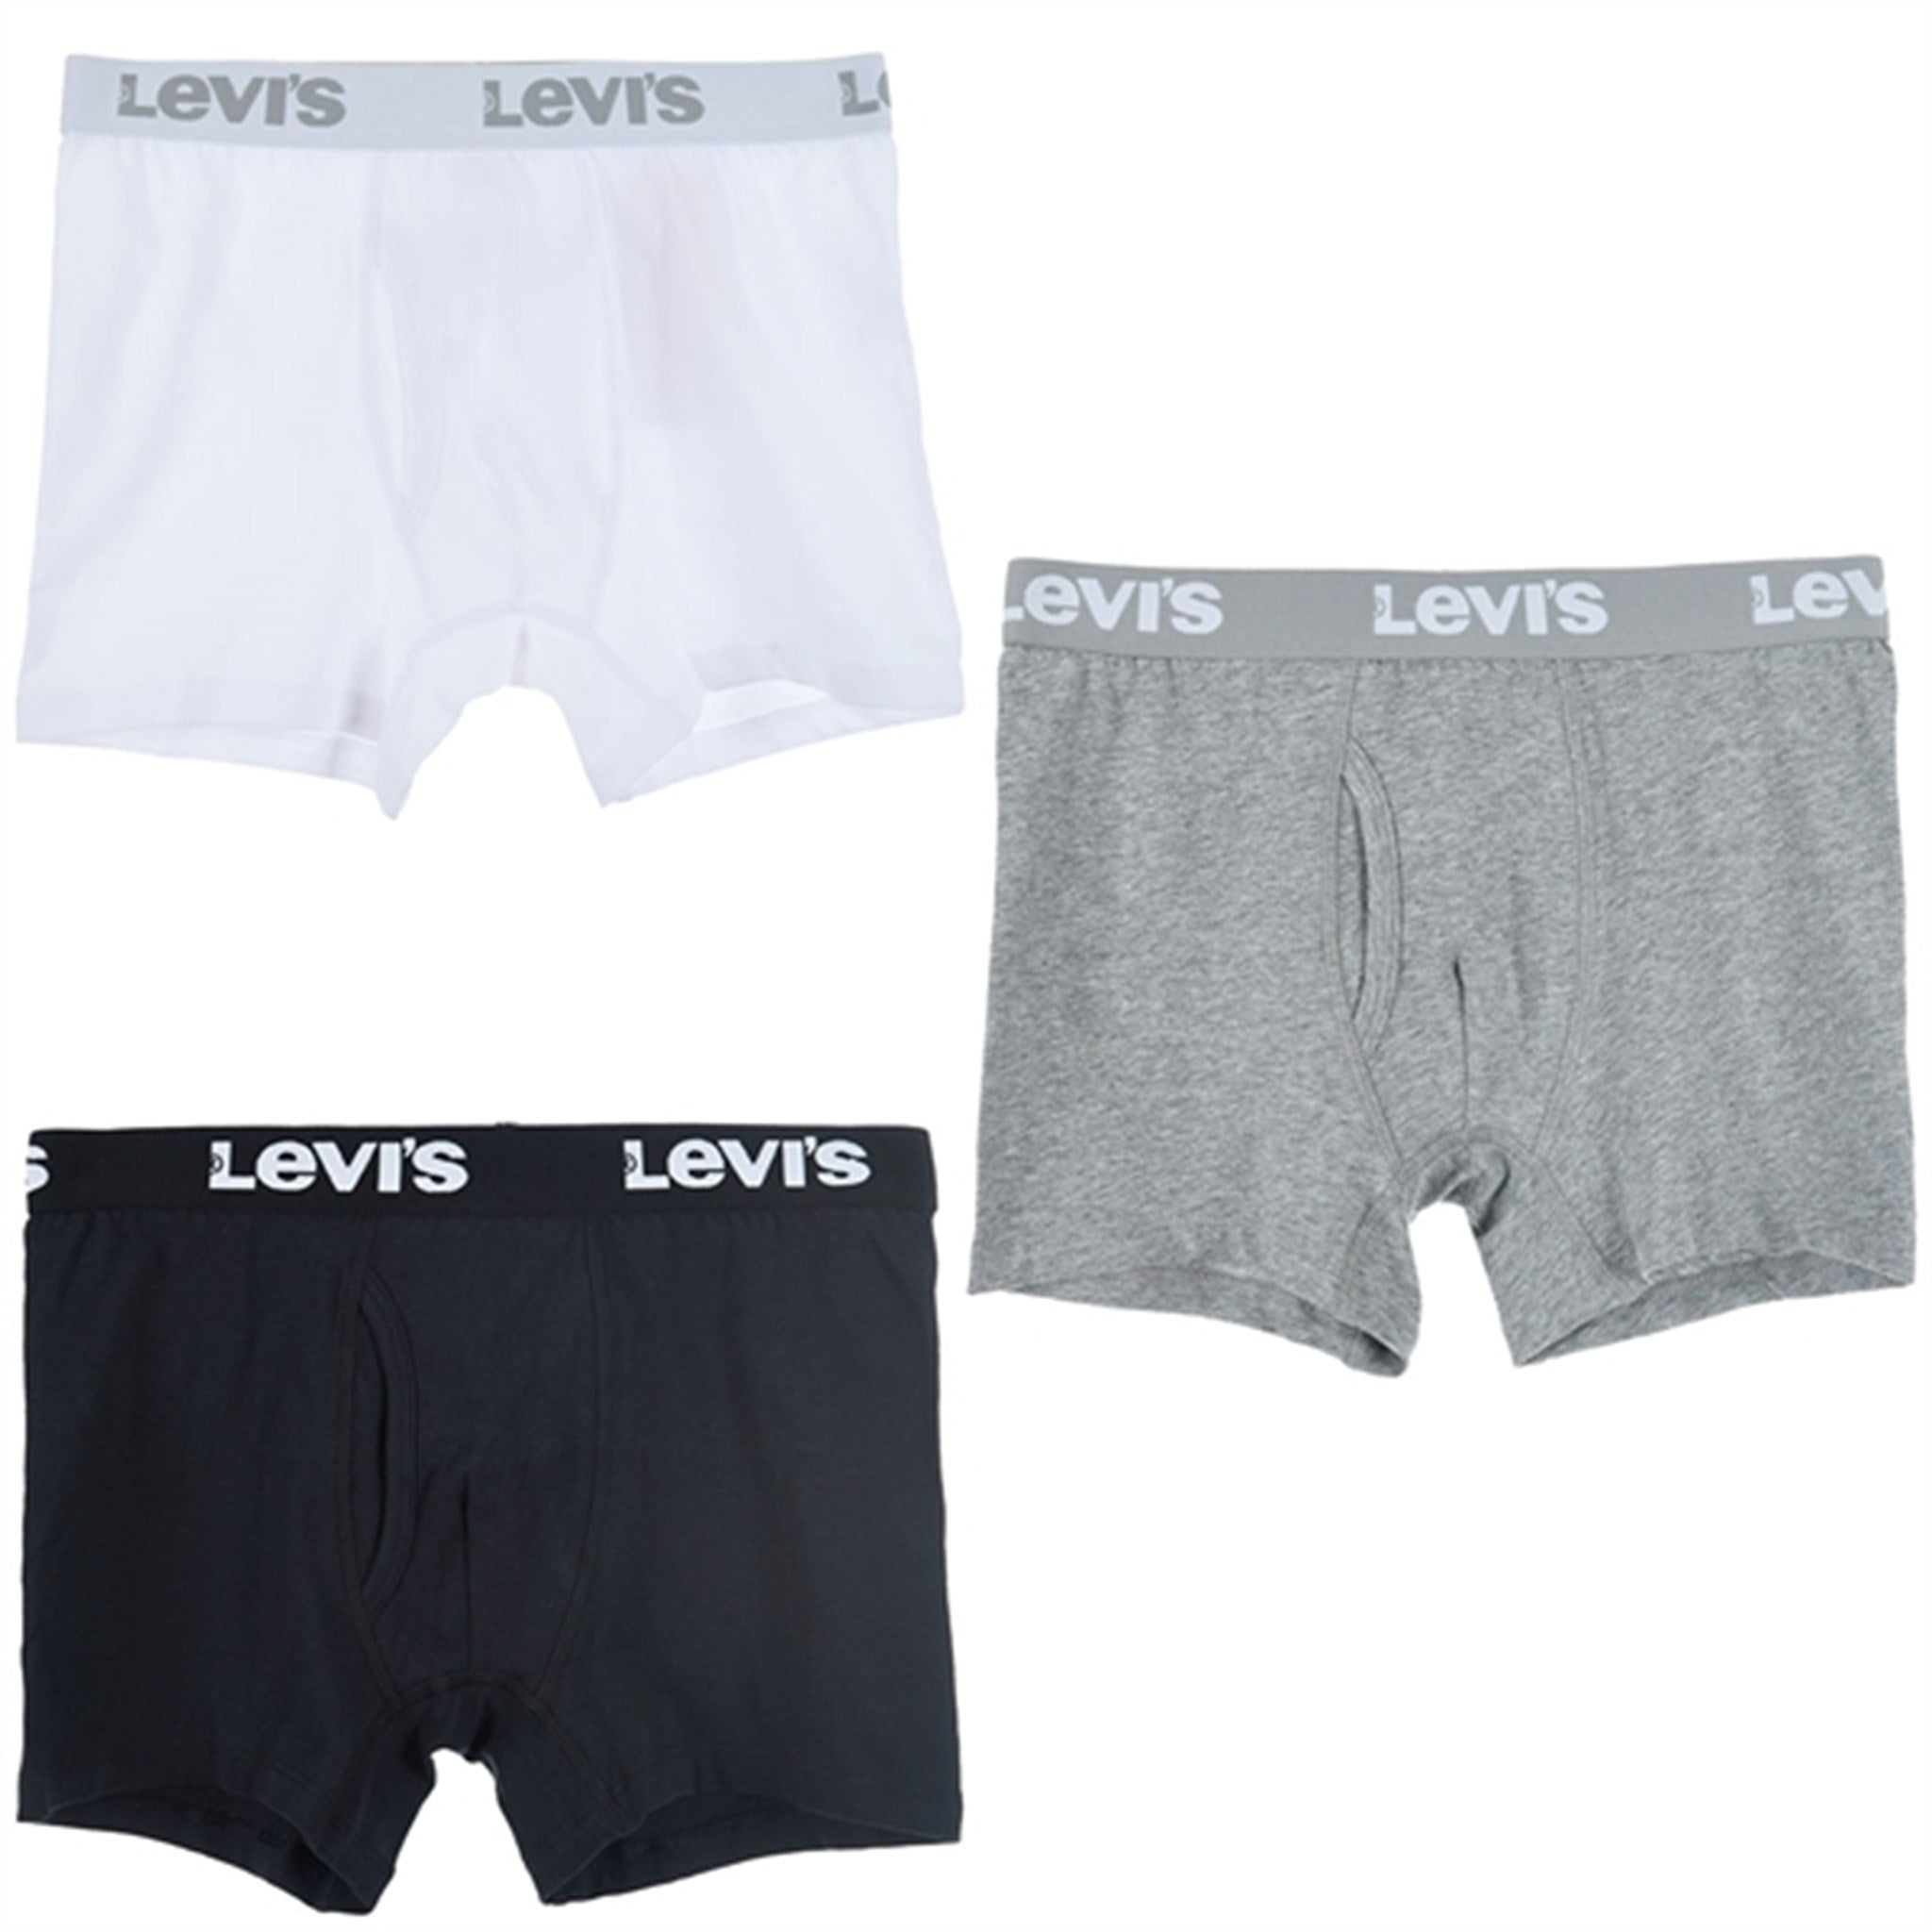 Levi's Boxer Brief 3-Pack White